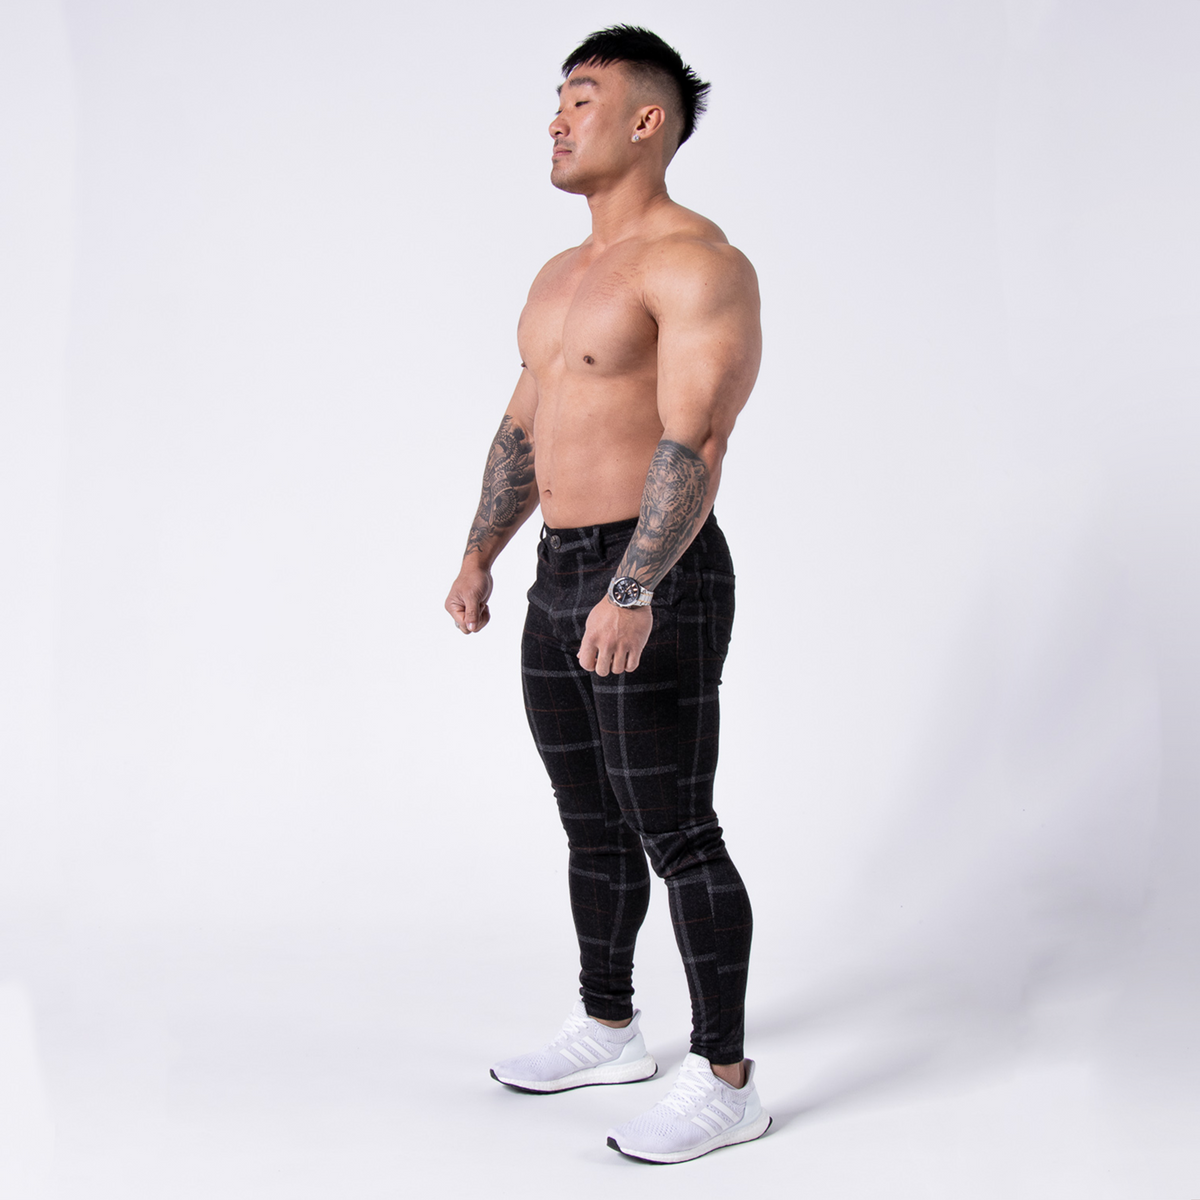 KCC Men's Premium Soft Check Pants - Black